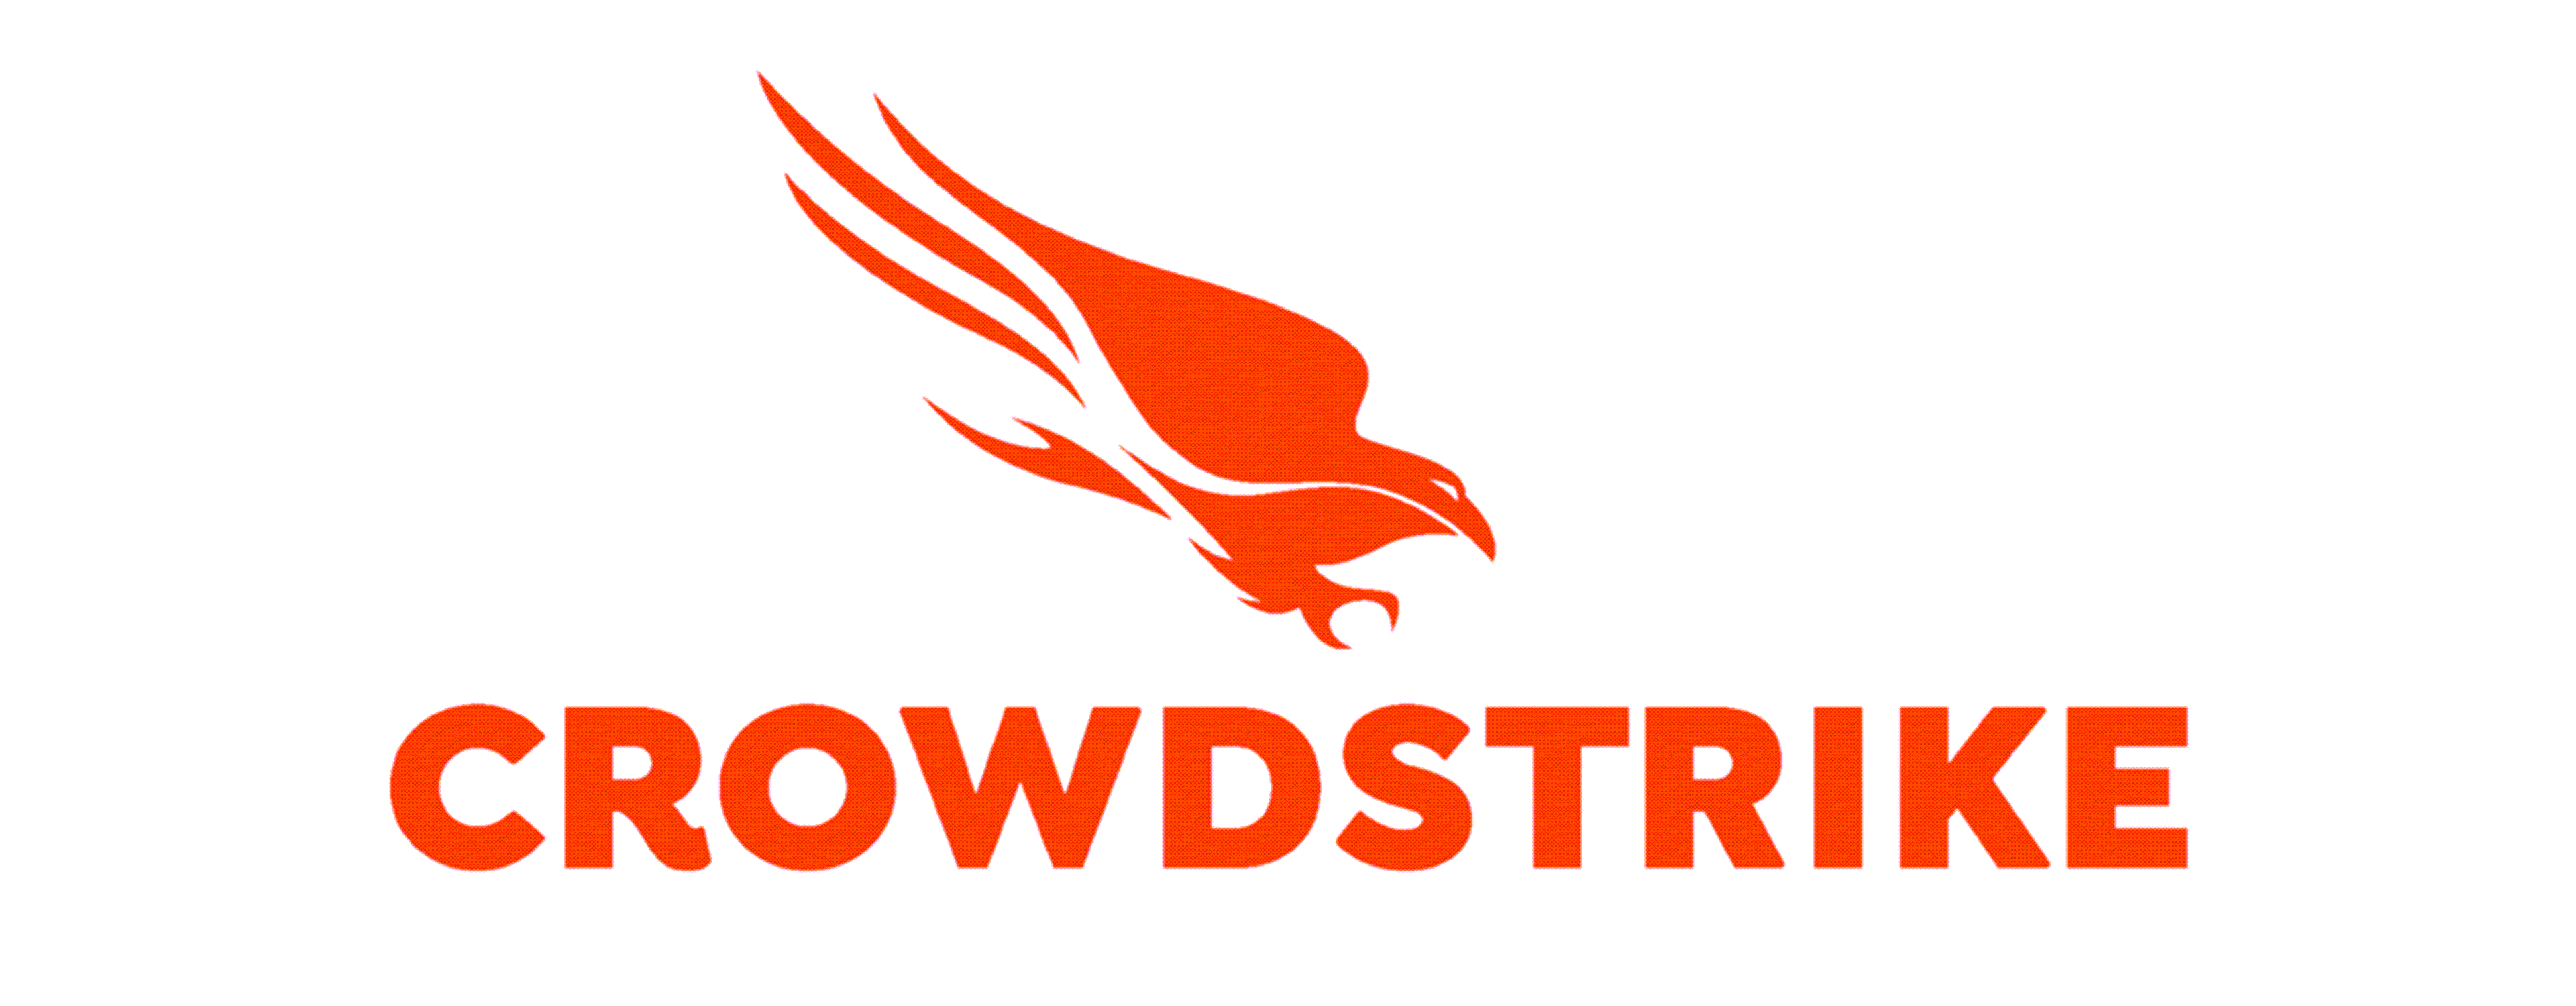             CrowdStrike-Logo        